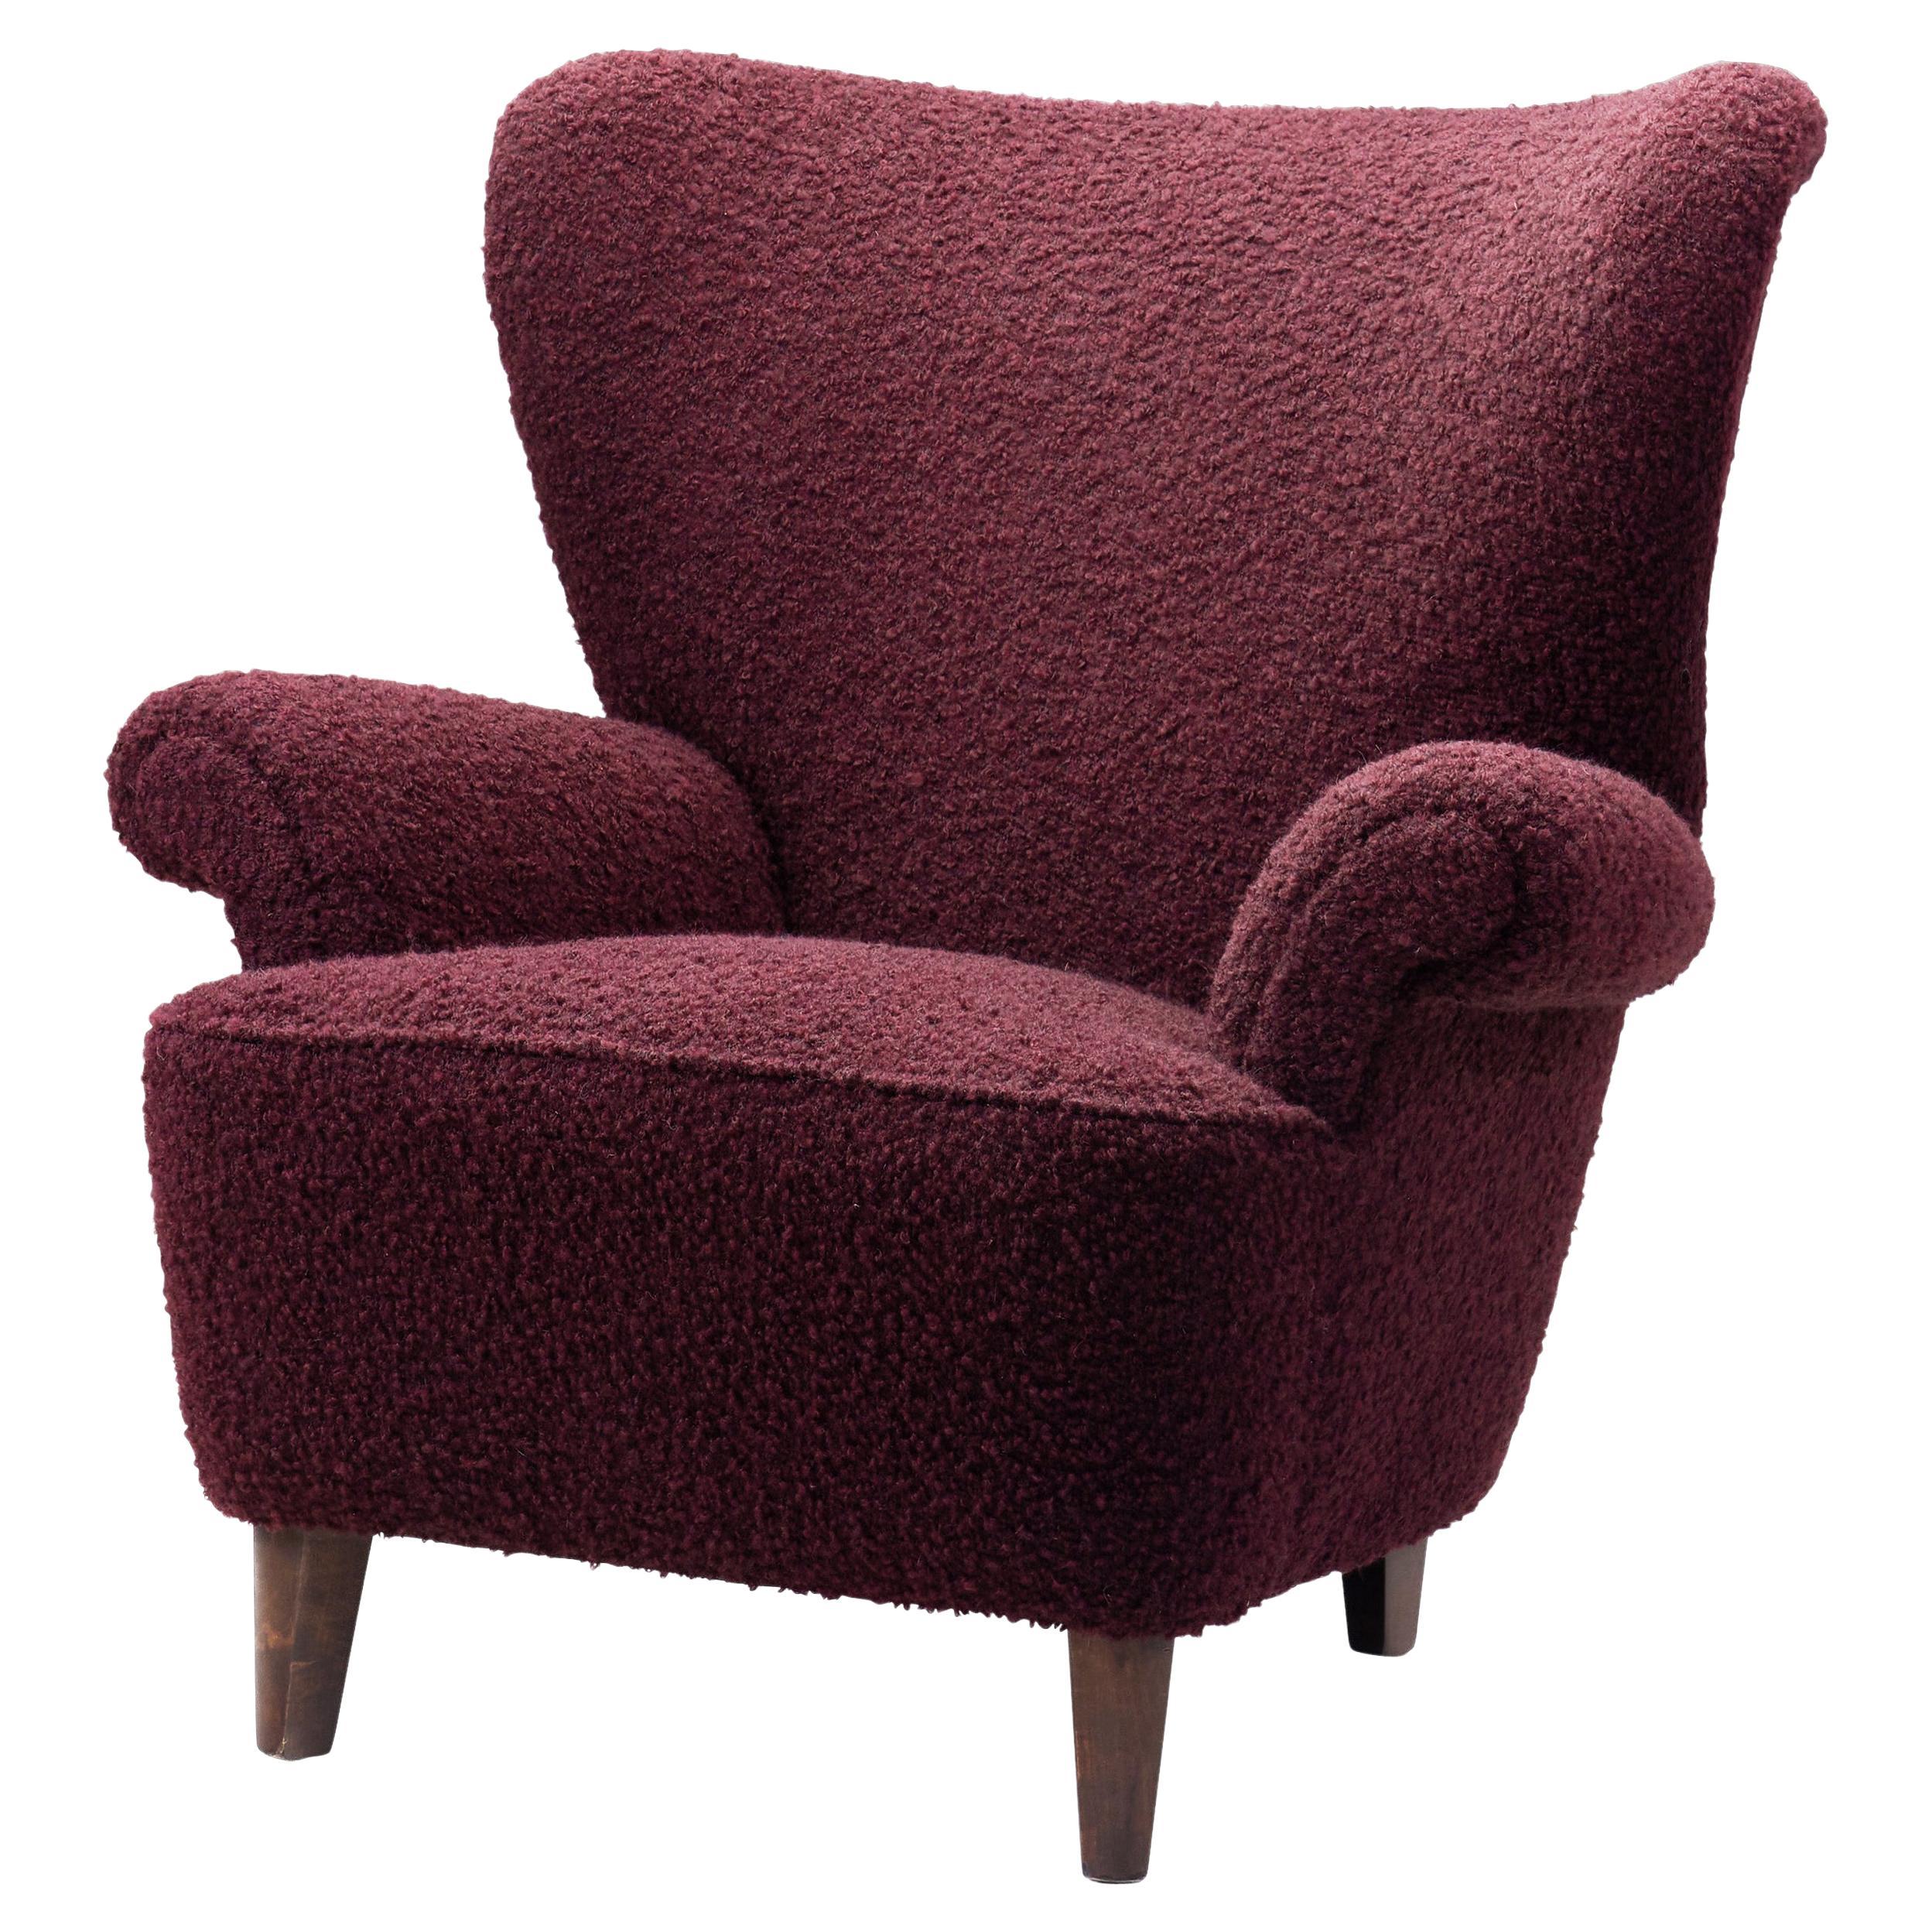 Upholstered Swedish Modern Lounge Chair, Sweden 1940s